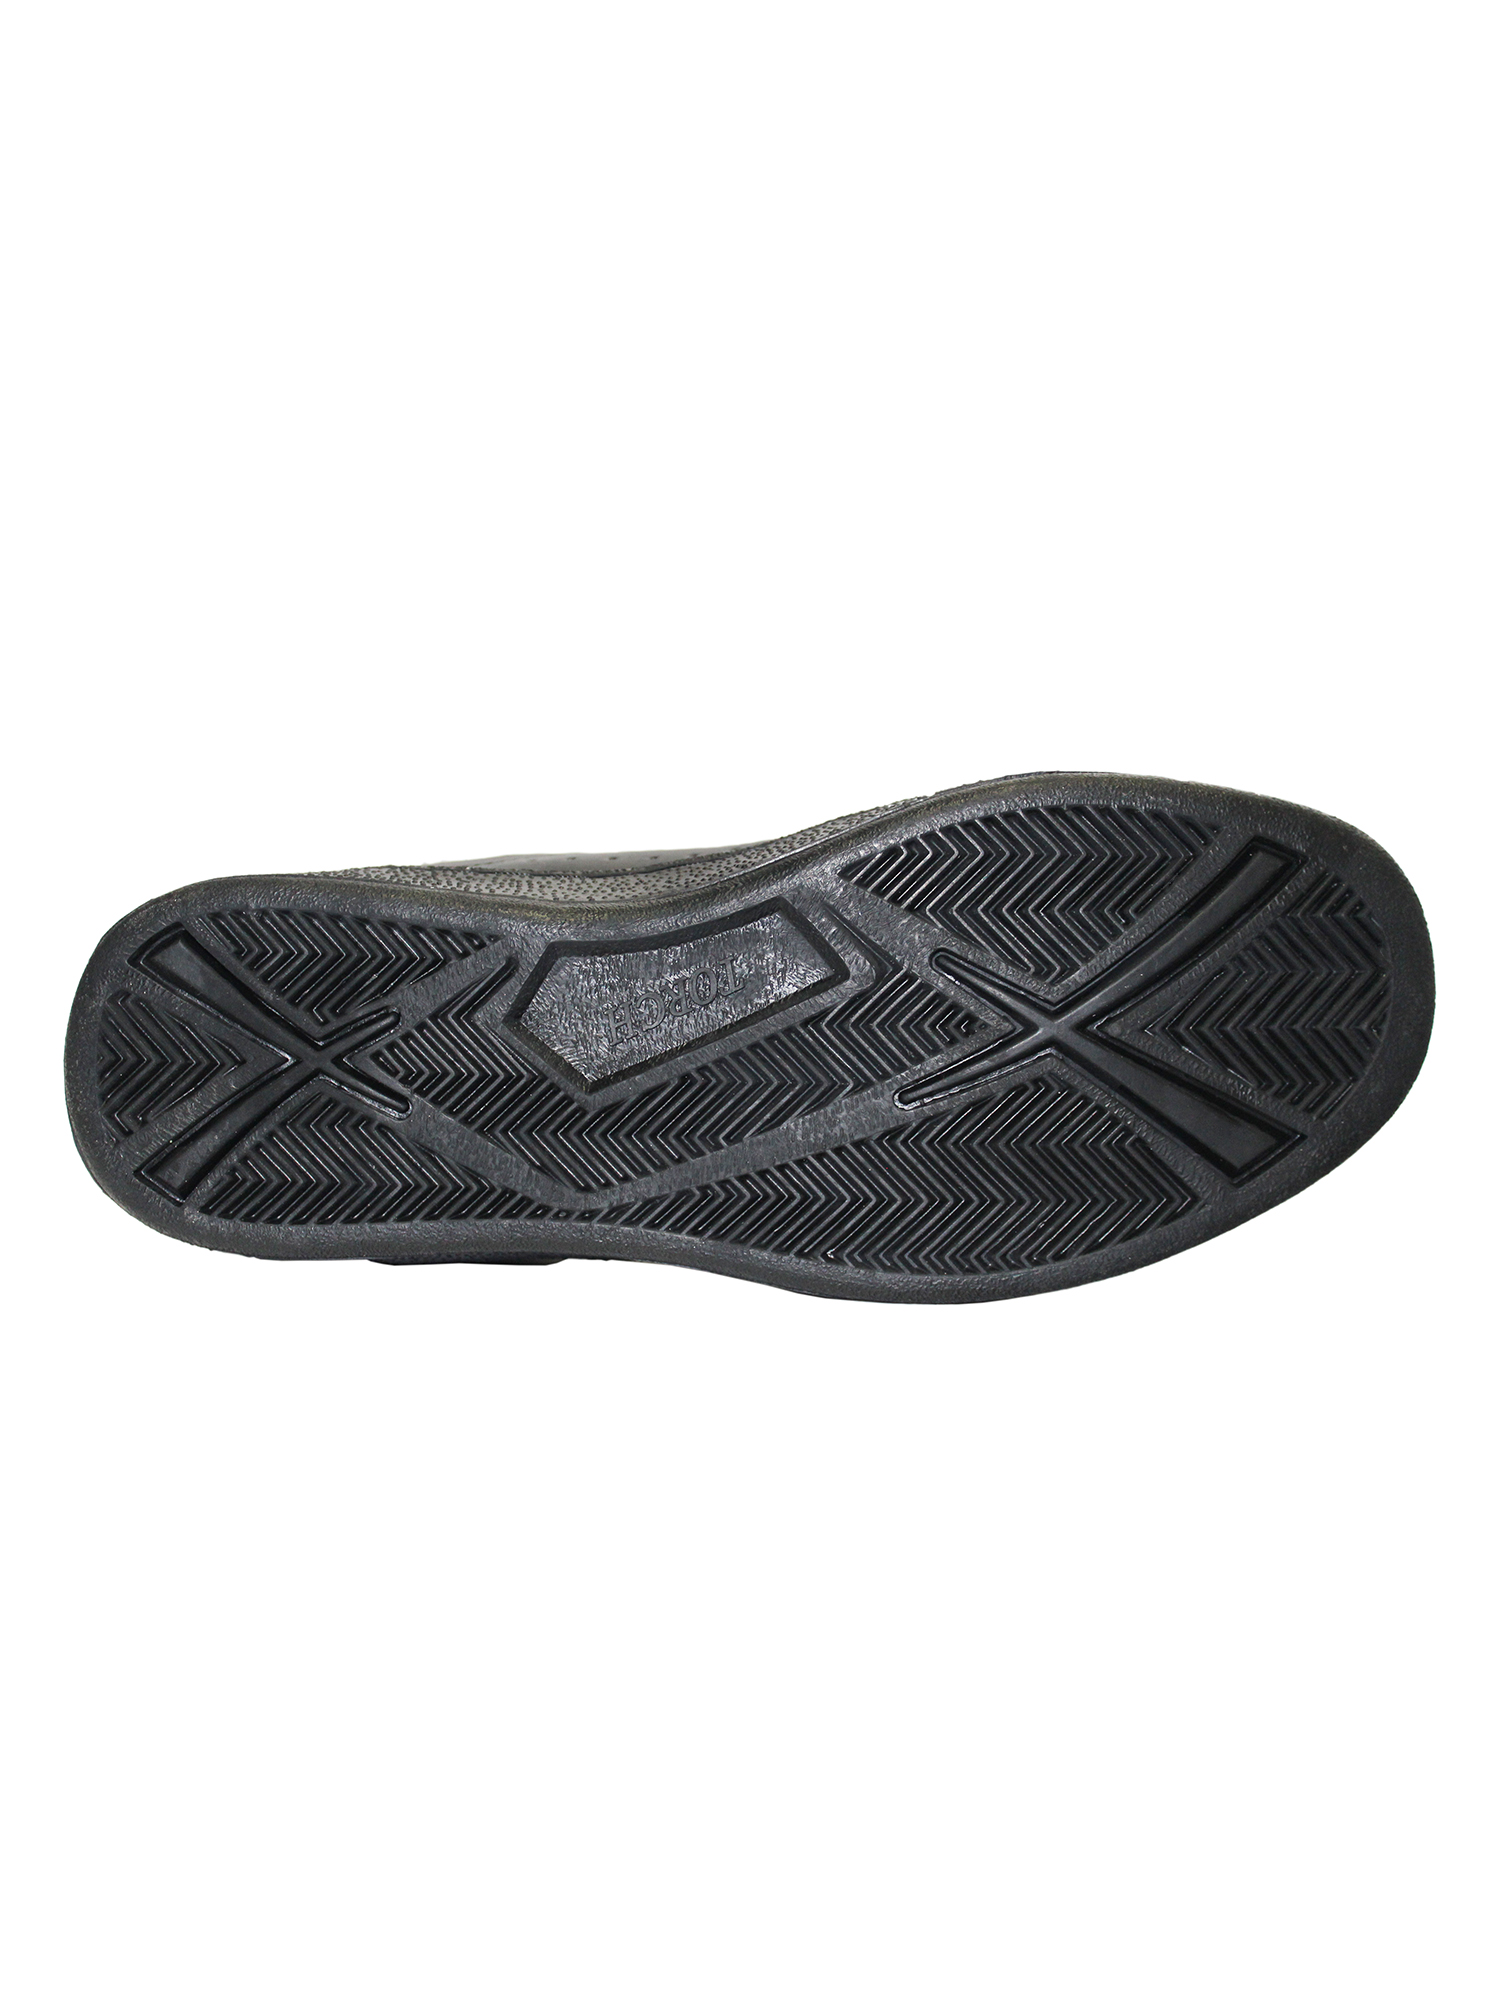 Tanleewa Men's Leather Strap Sneakers Lightweight Hook and Loop Walking Shoe Size 10.5 Adult Male - image 3 of 4